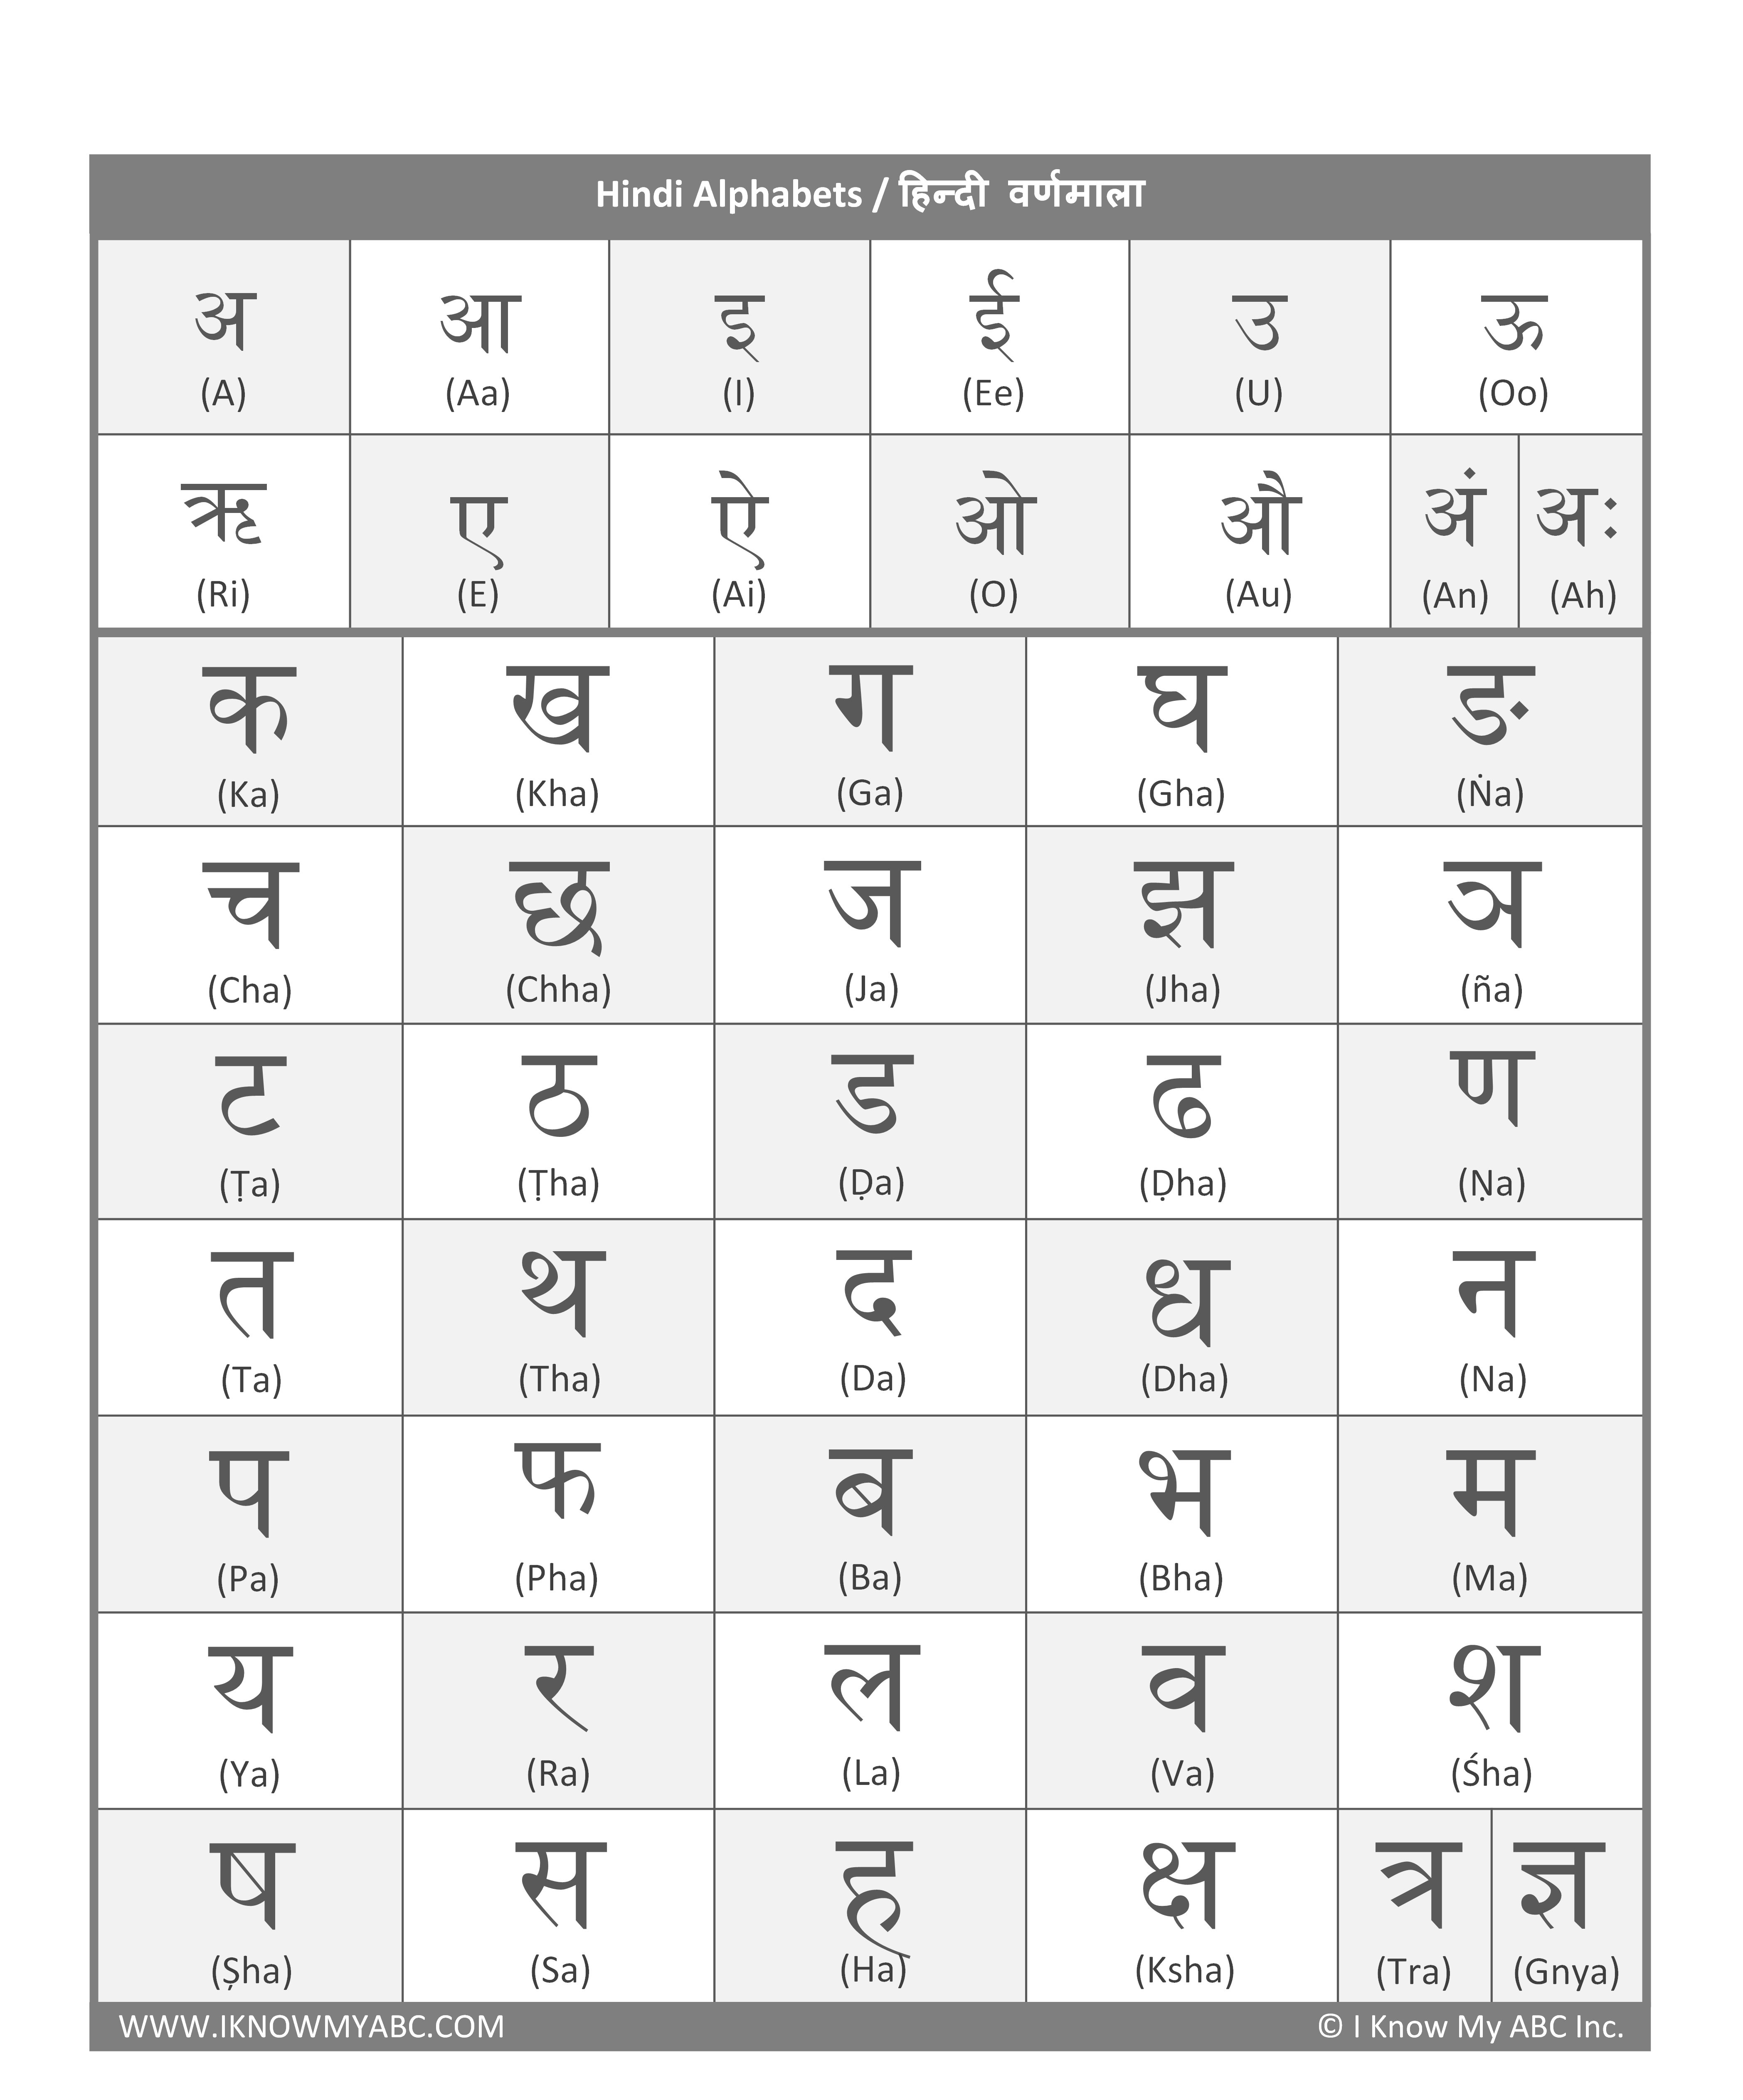 hindi-alphabet-13-vowels-and-33-consonants-hindi-alphabet-hindi